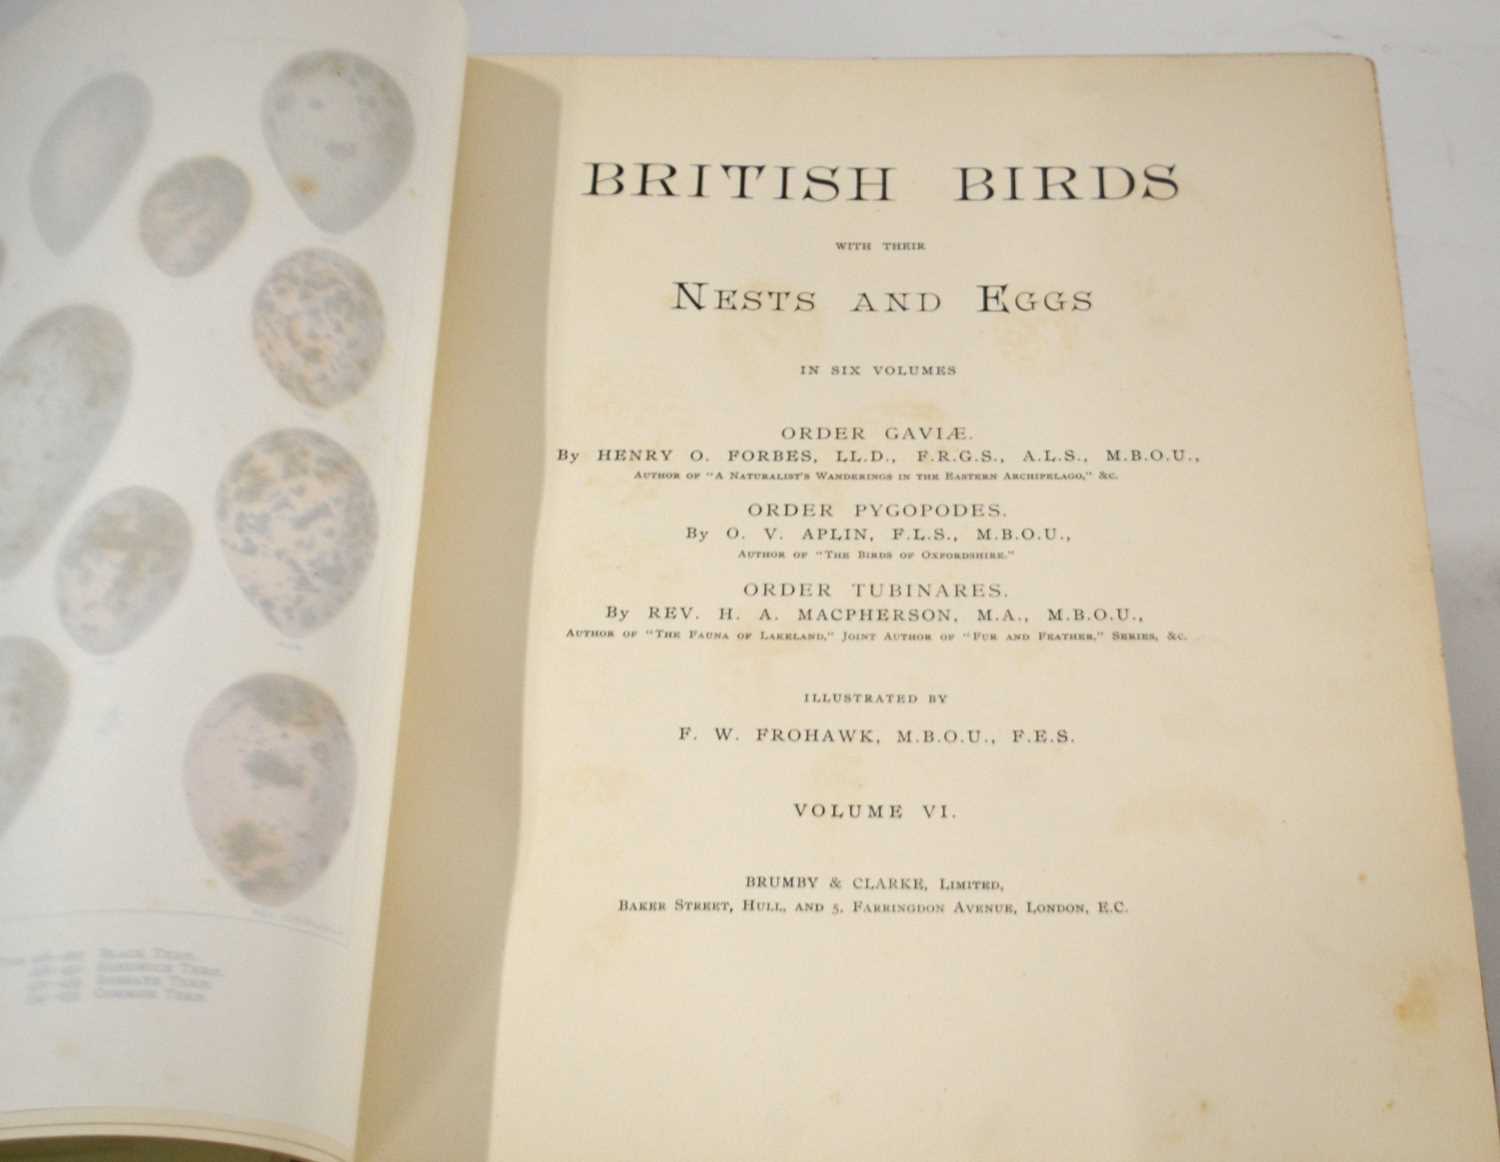 Ornithology interest: Complete volume 1-6 ornithological interest books "British Birds with their - Image 2 of 2